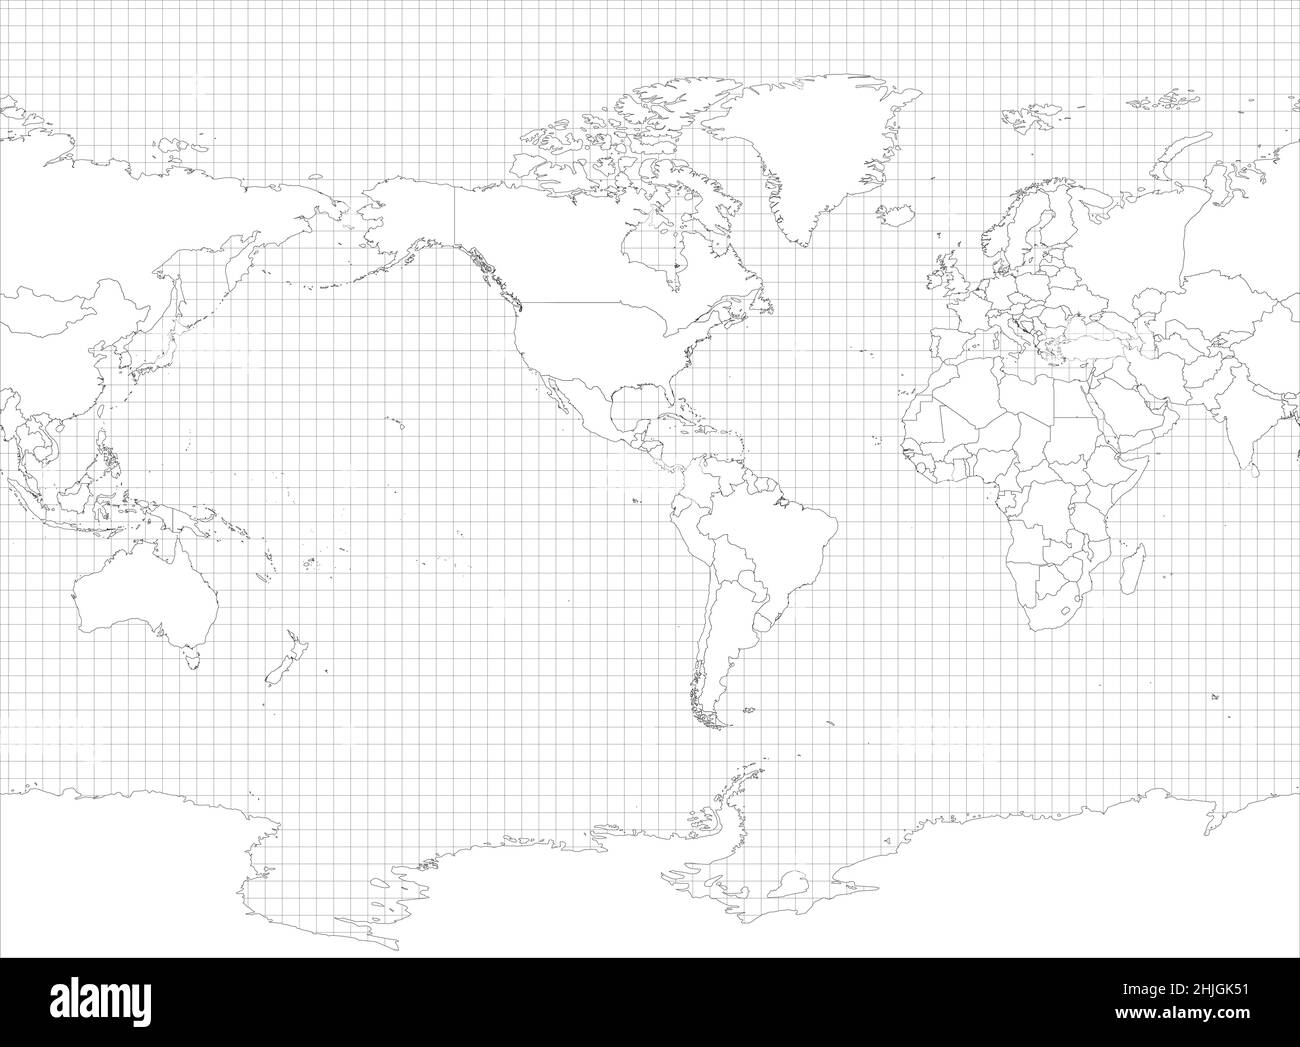 world grid square map